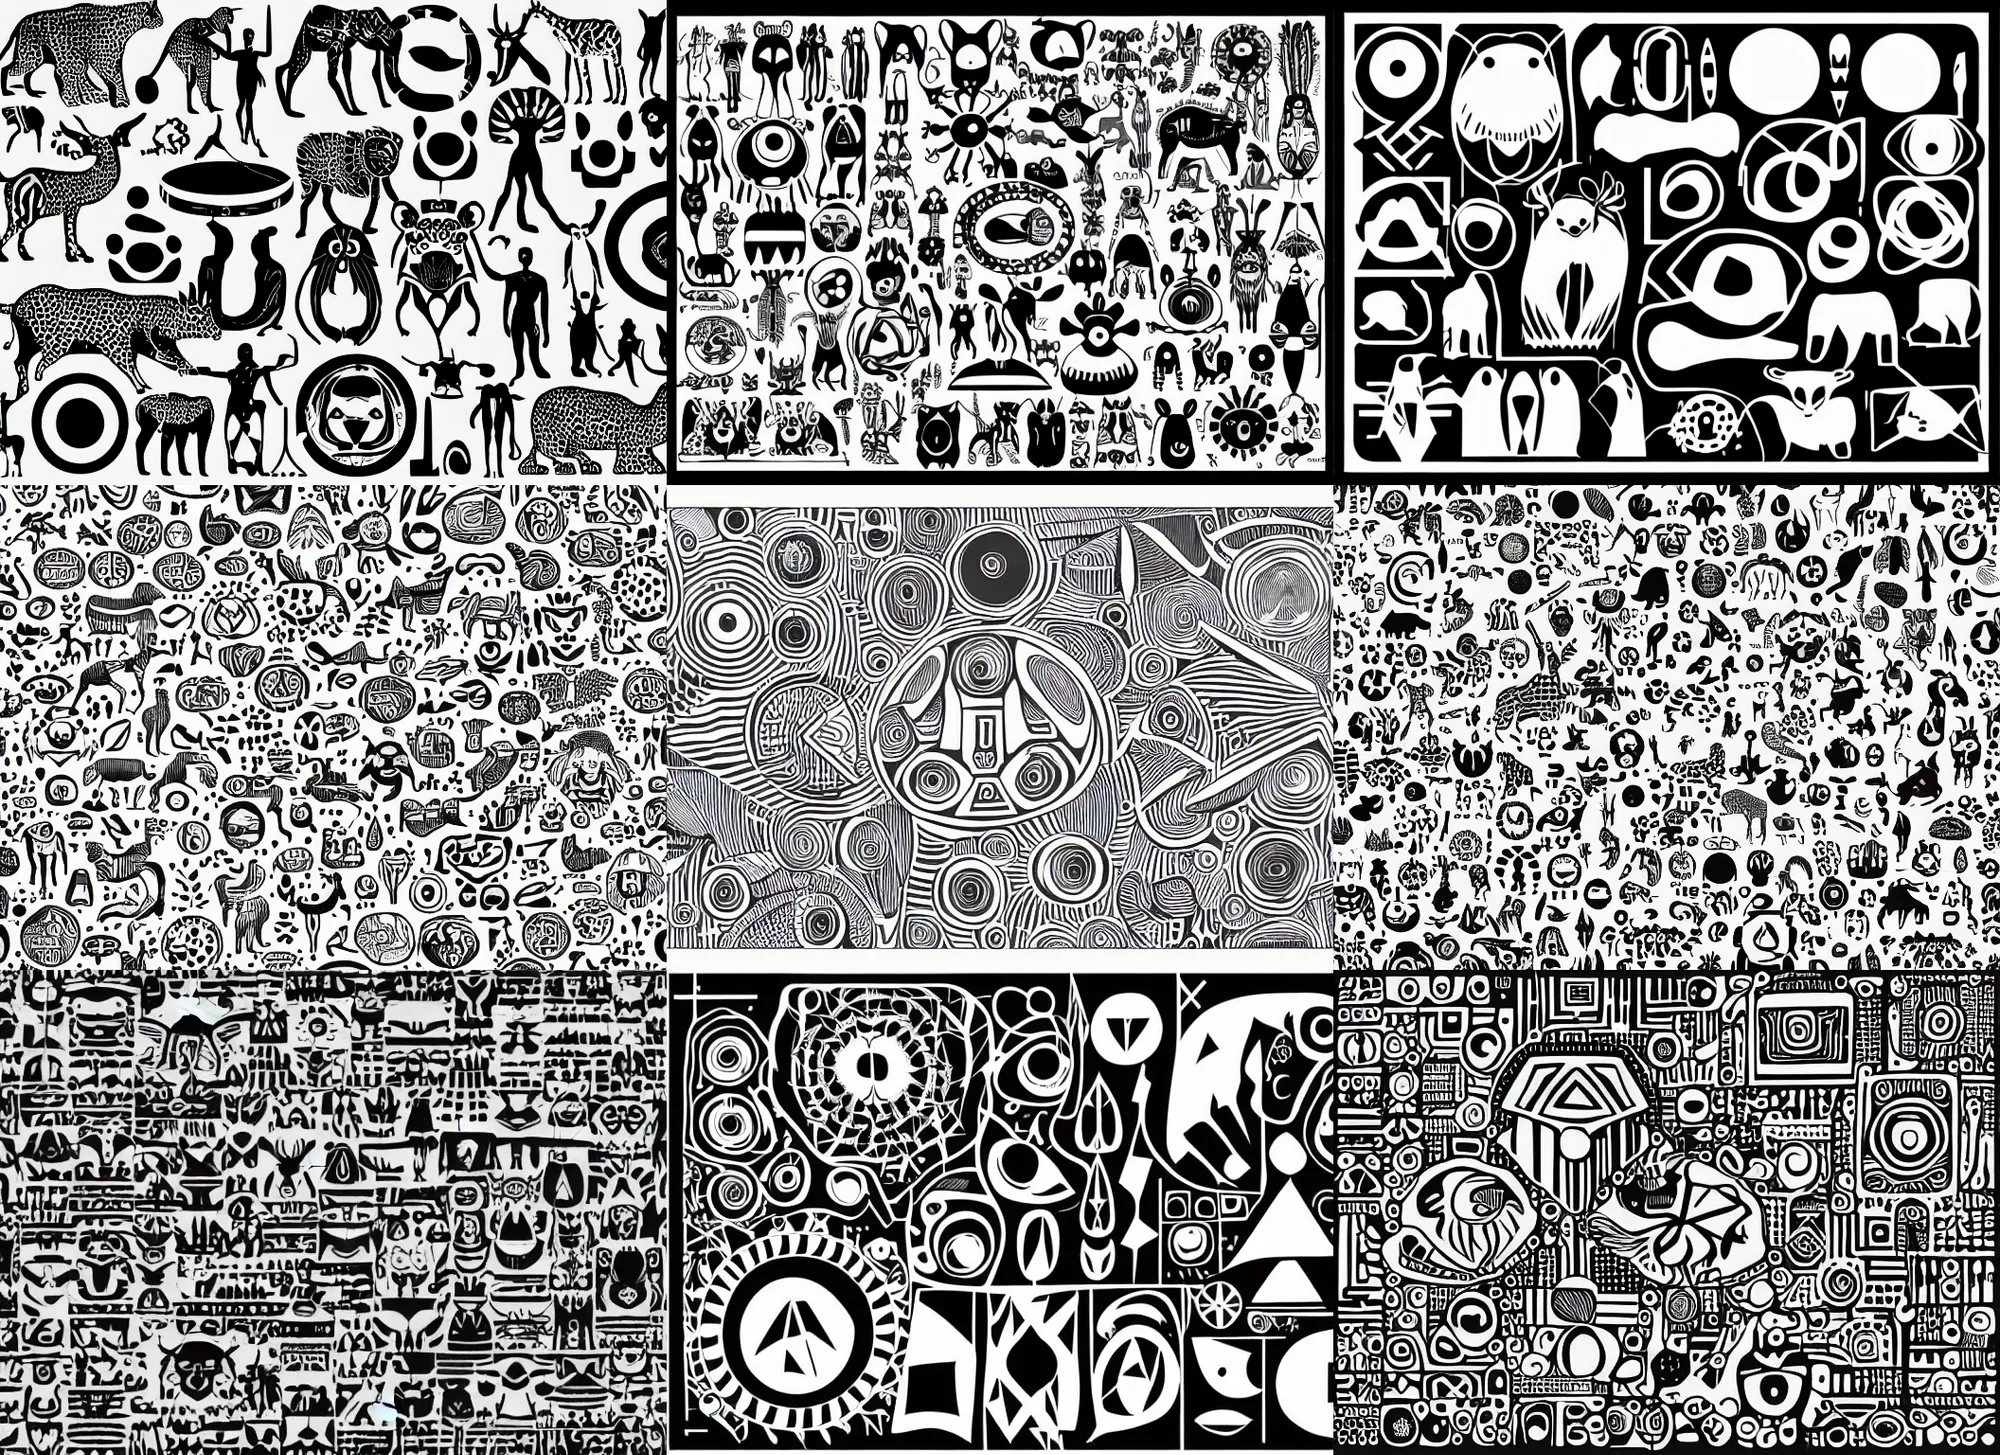 Prompt: animals aboriginal clean shapes by bauhaus, crop circles, tribal, sprite sheet, b & w, vector